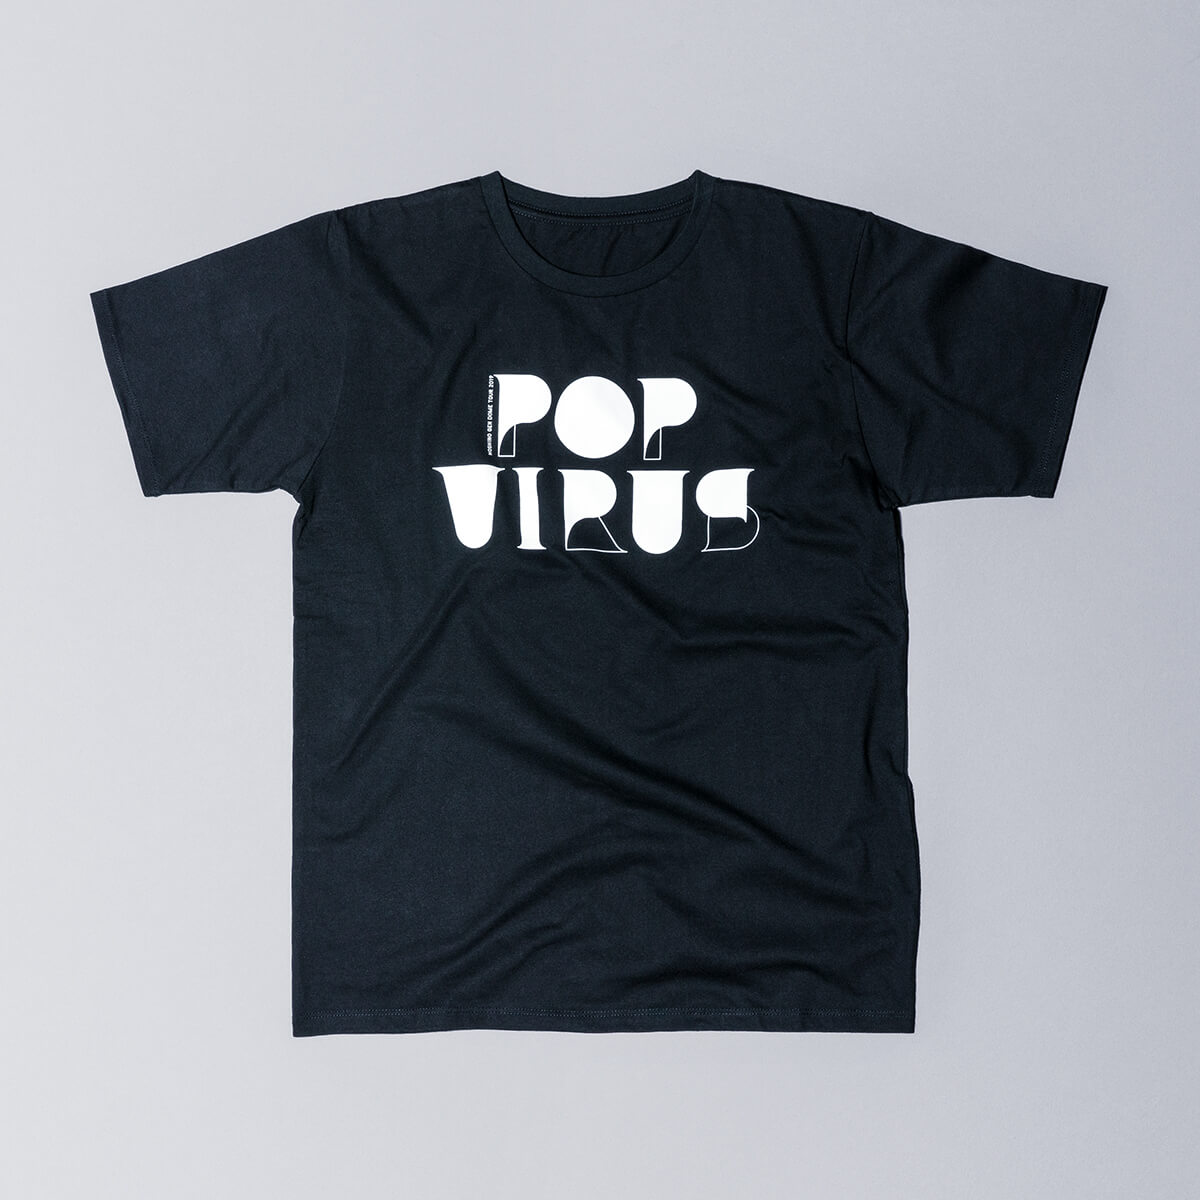 「POP VIRUS」T-shirt / LOGO